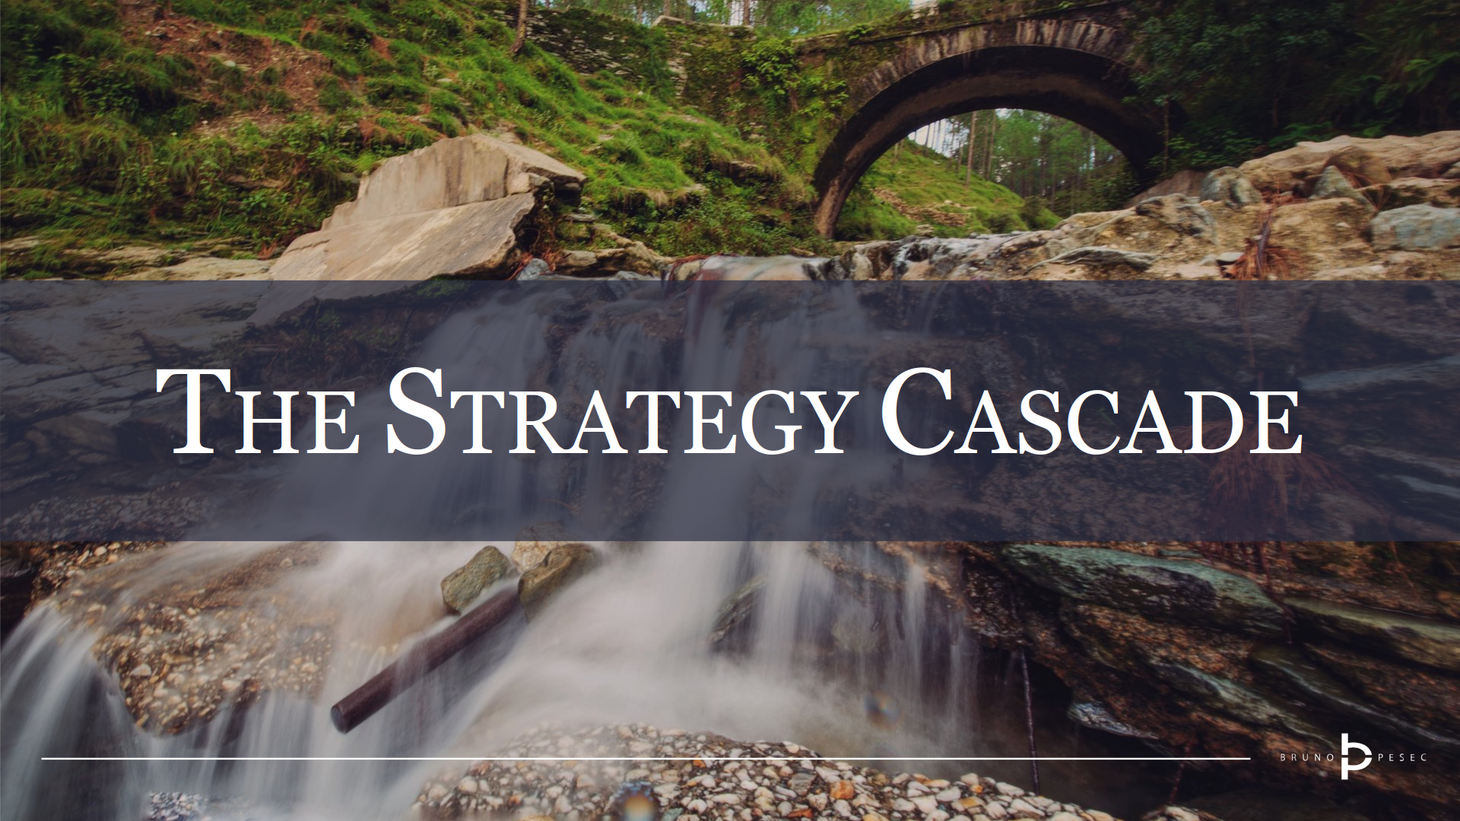 The strategy cascade